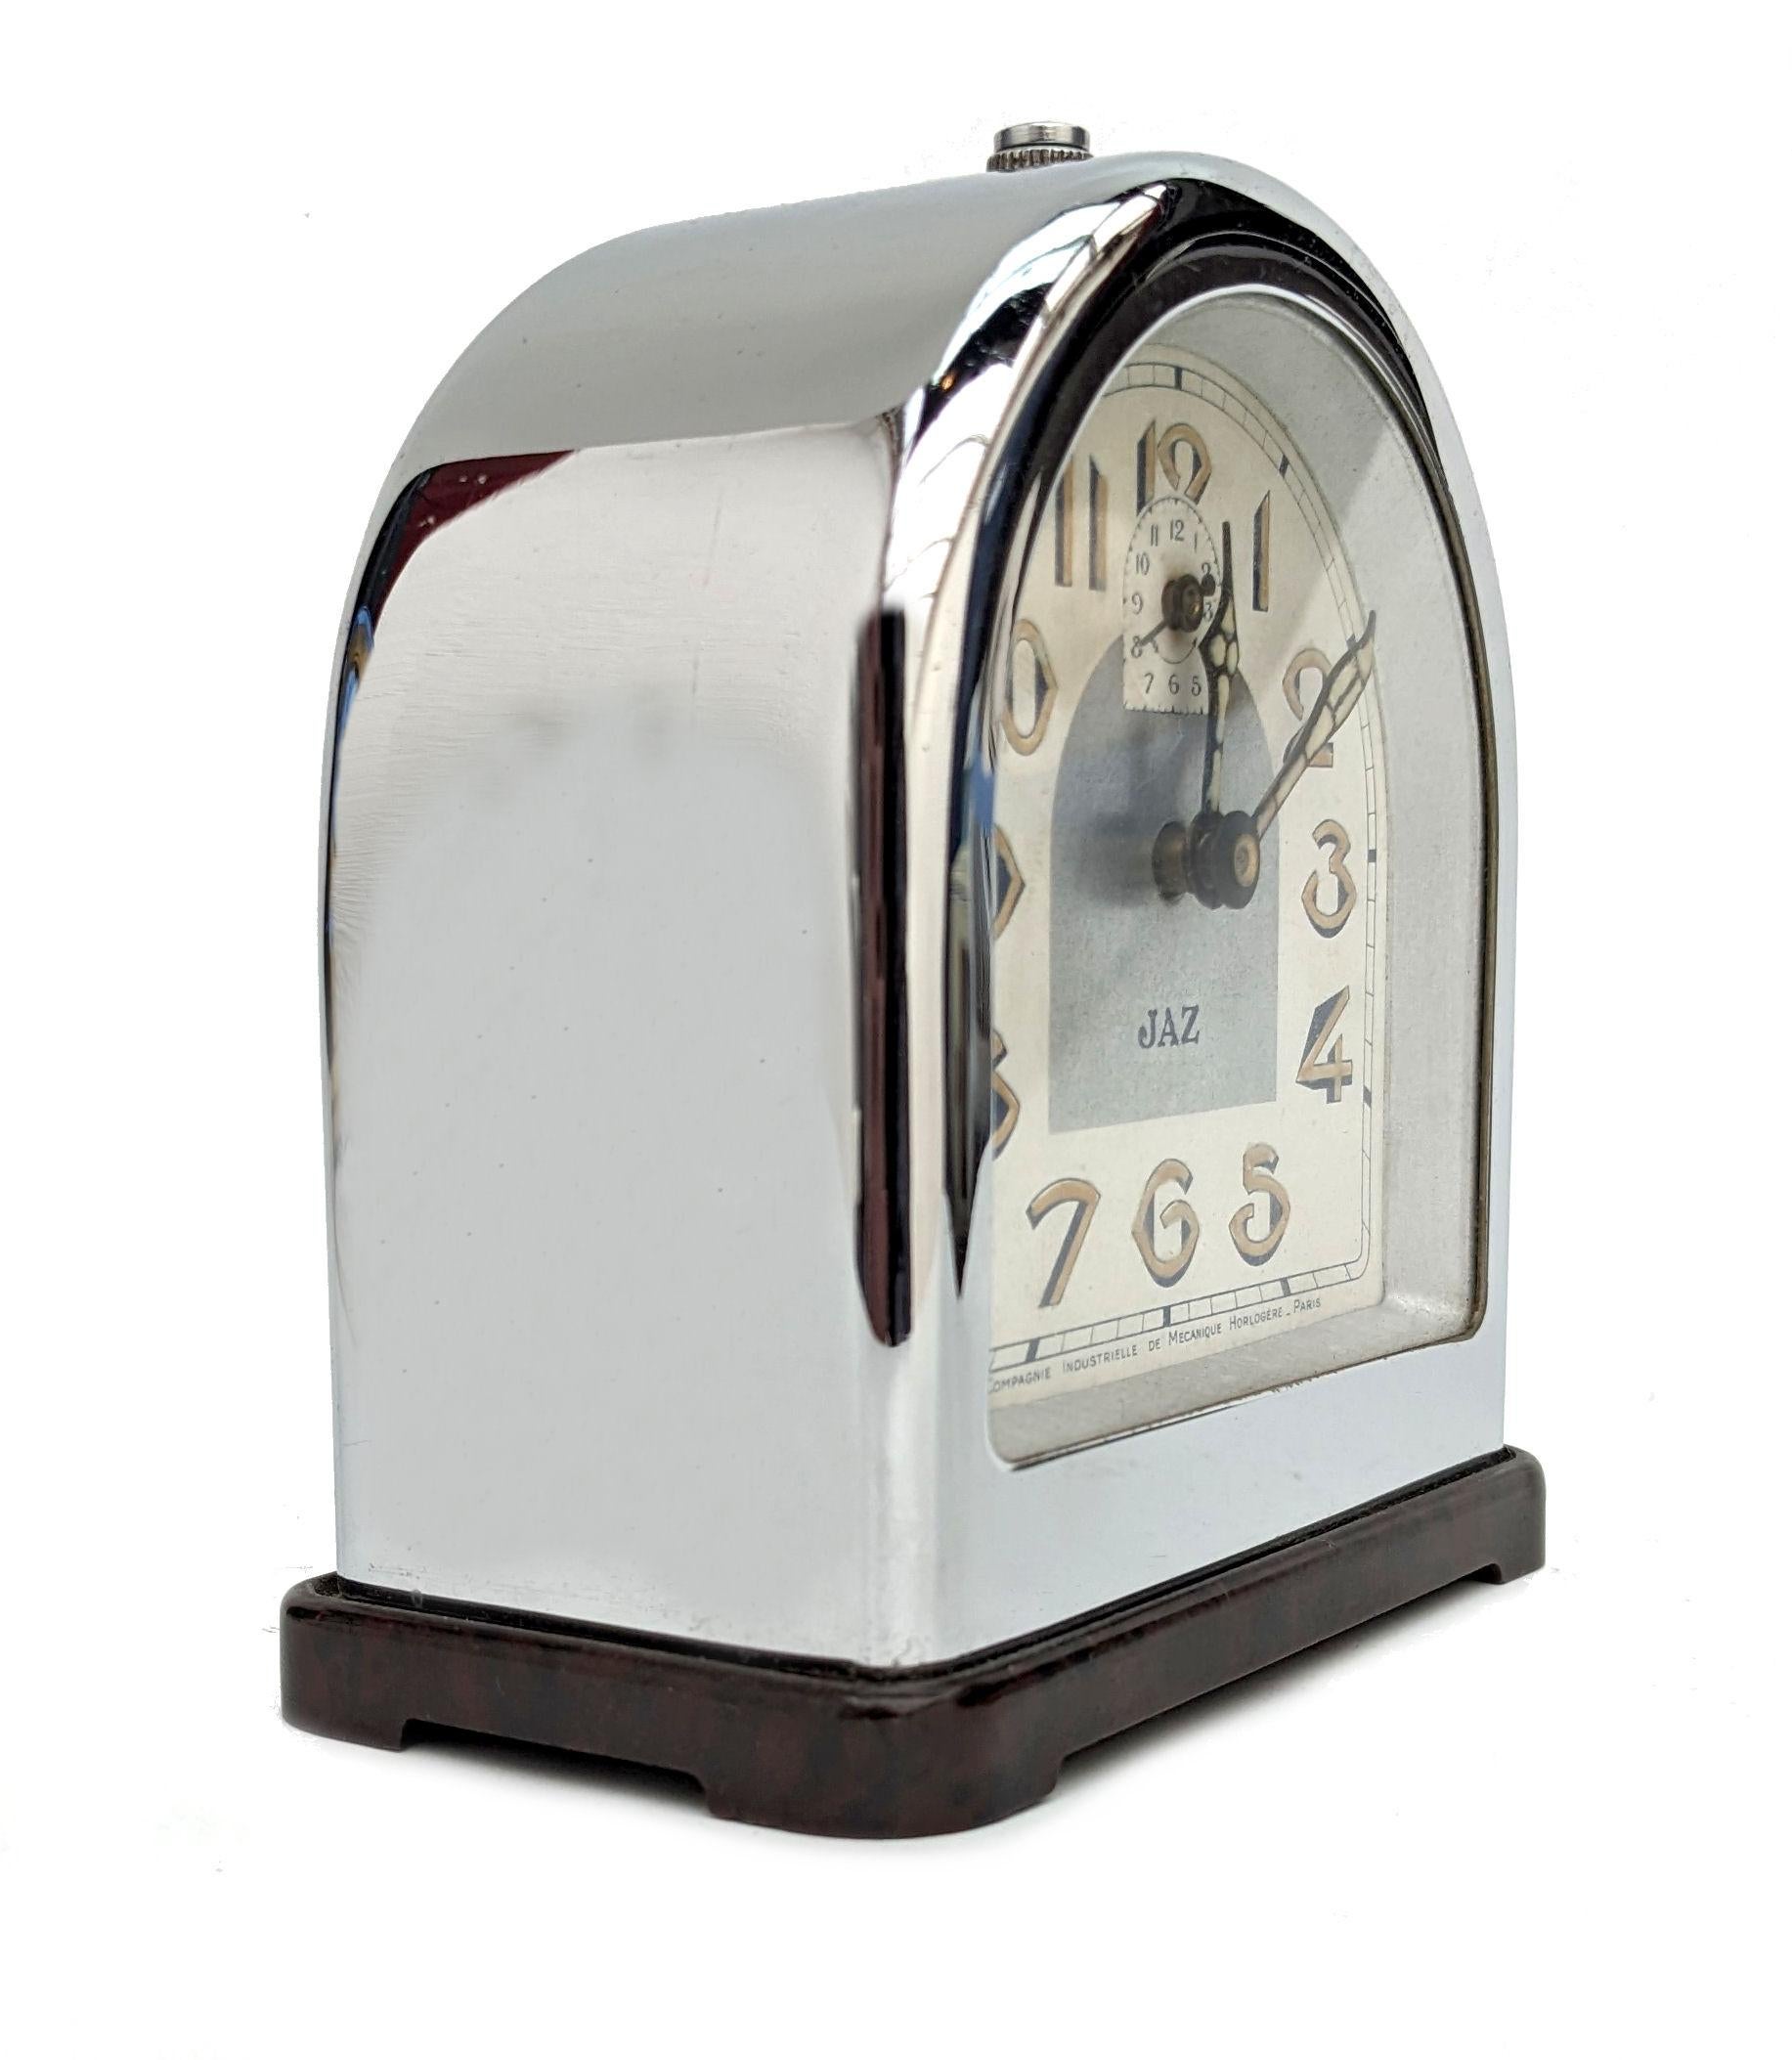 Chrome Art Deco French Clock by Jaz, c1930 For Sale